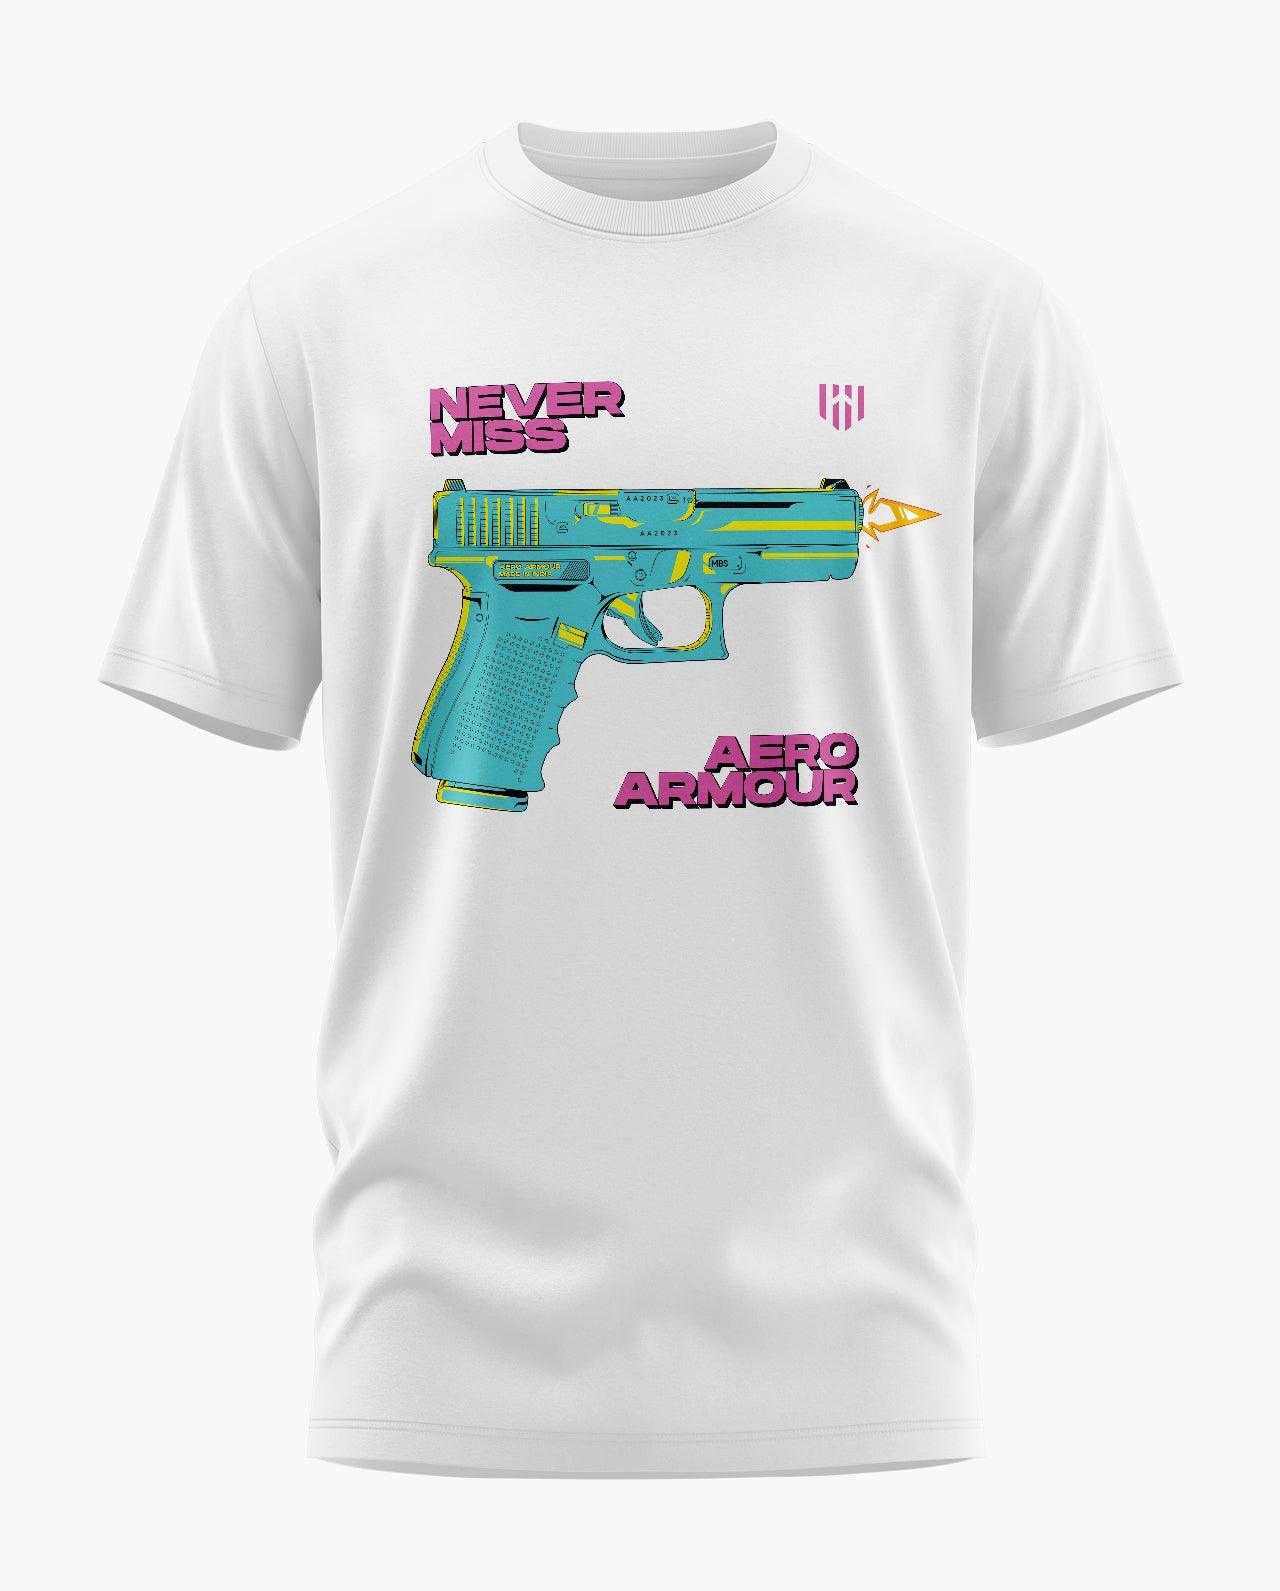 Glocks Never Miss T-Shirt - Aero Armour